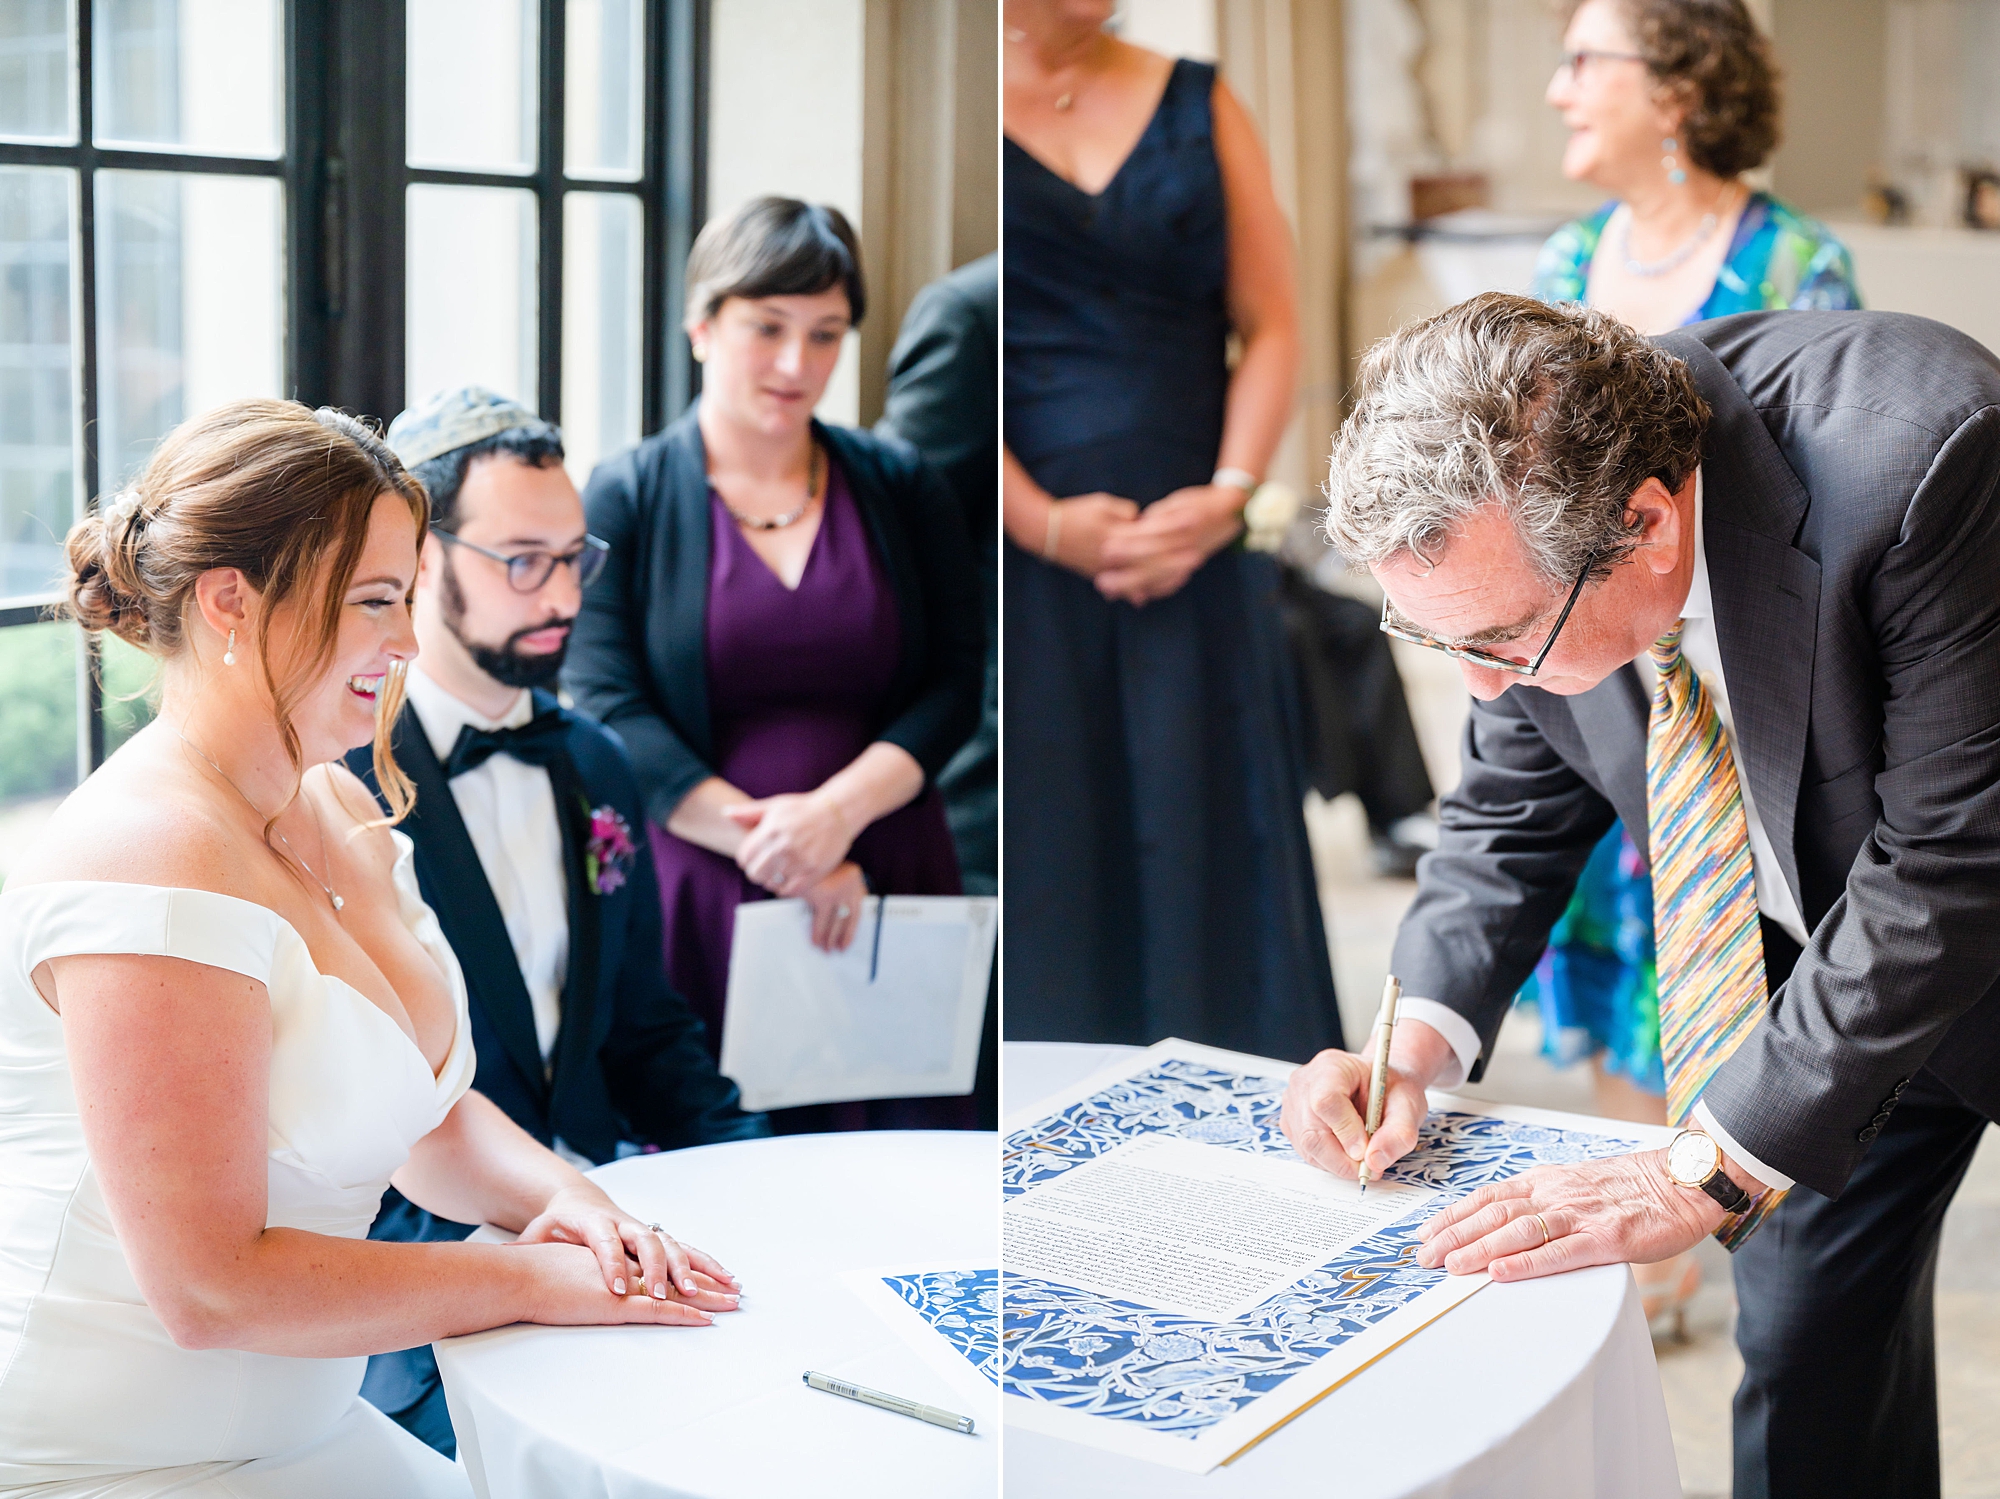 newlyweds sign ketubah before Jewish wedding ceremony at Baltimore Museum of Art